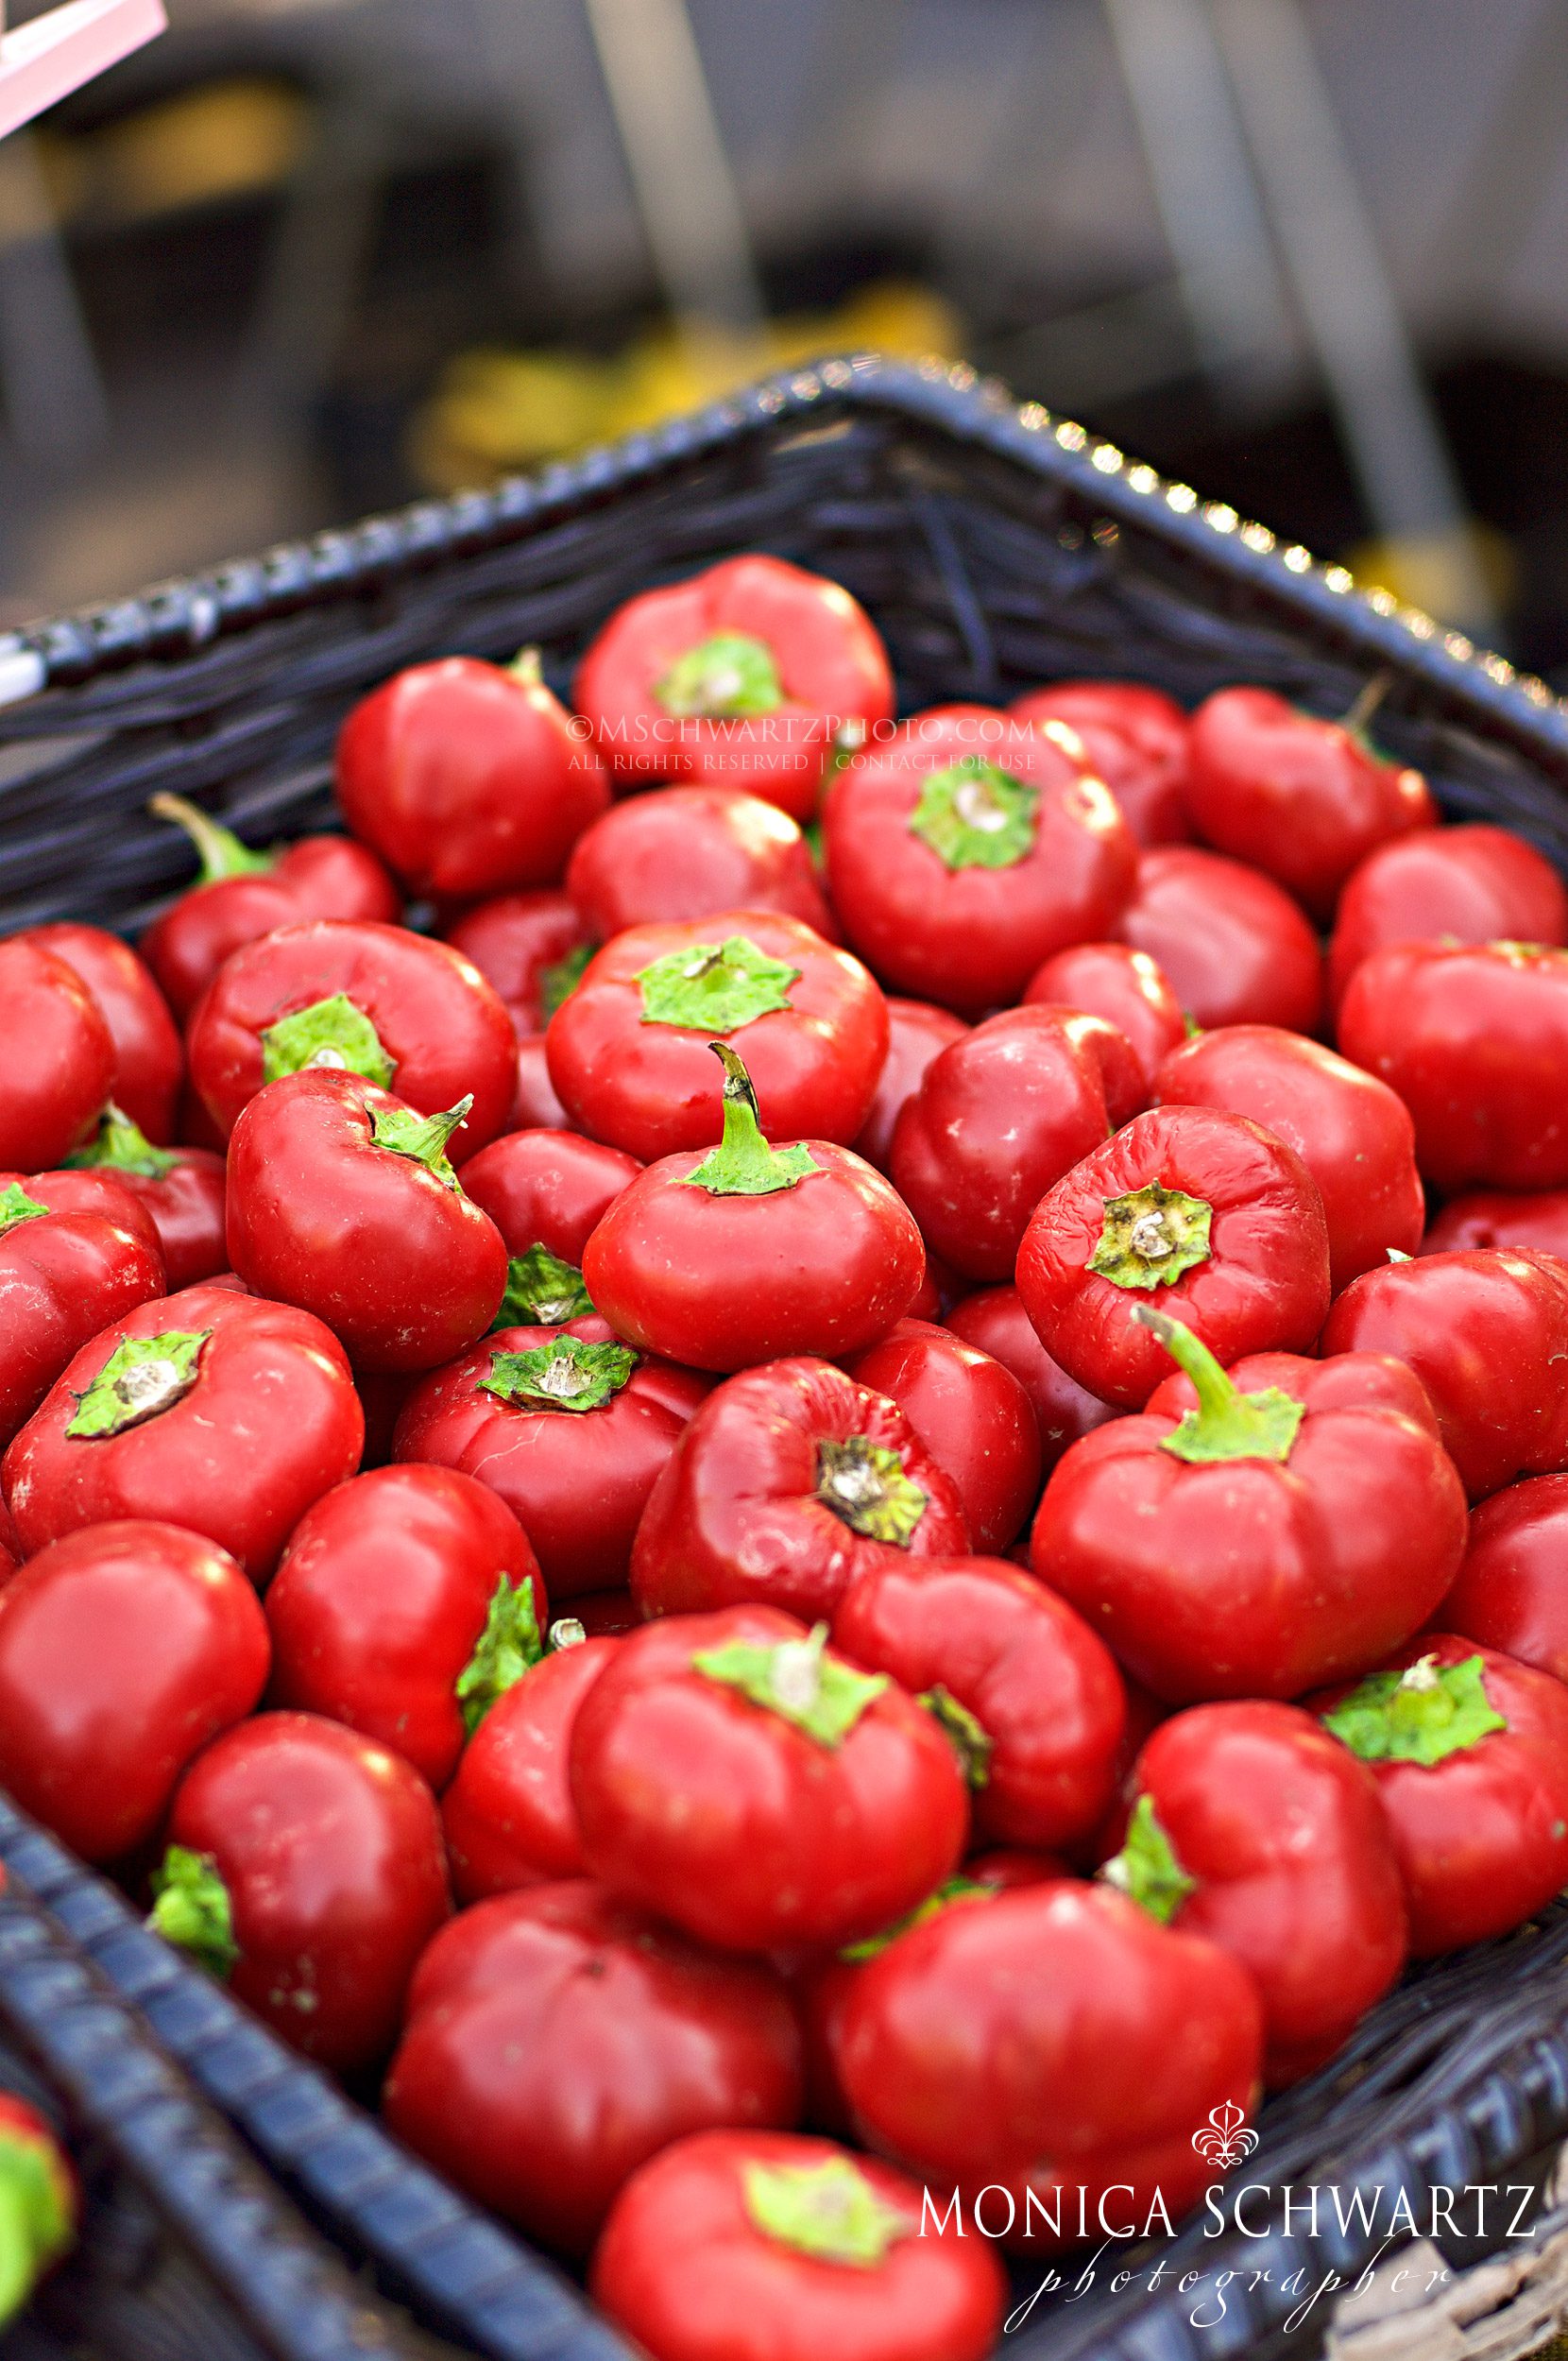 Cherry-Bomb-peppers-at-the-Sonoma-Plaza-Farmers-Market-in-Sonoma-California